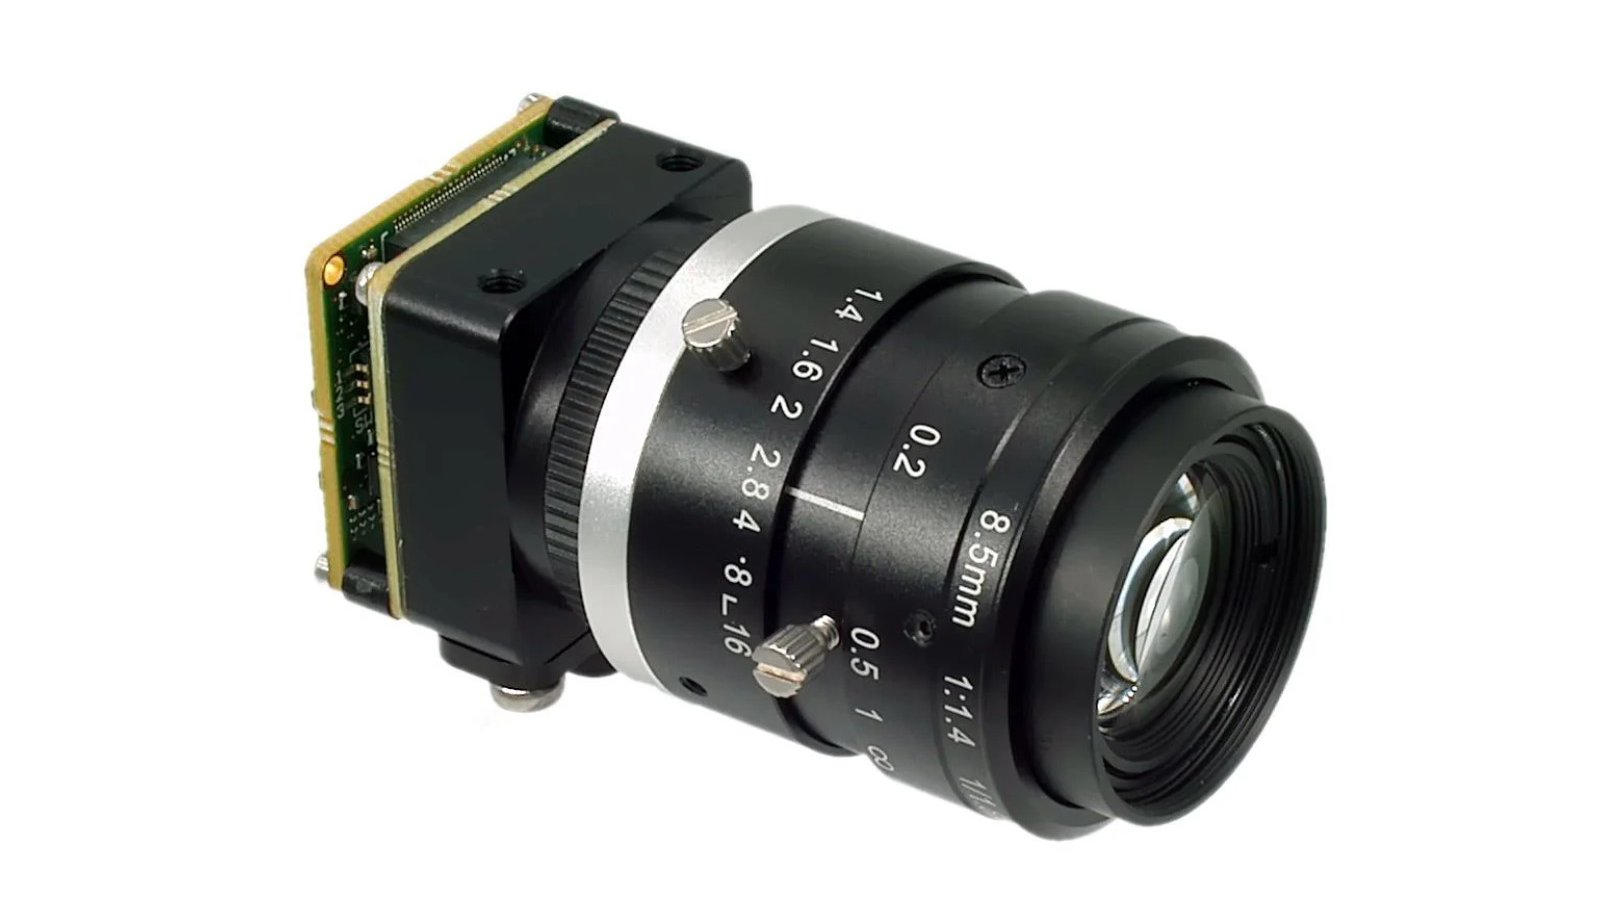 FSM-IMX547 Camera Modules